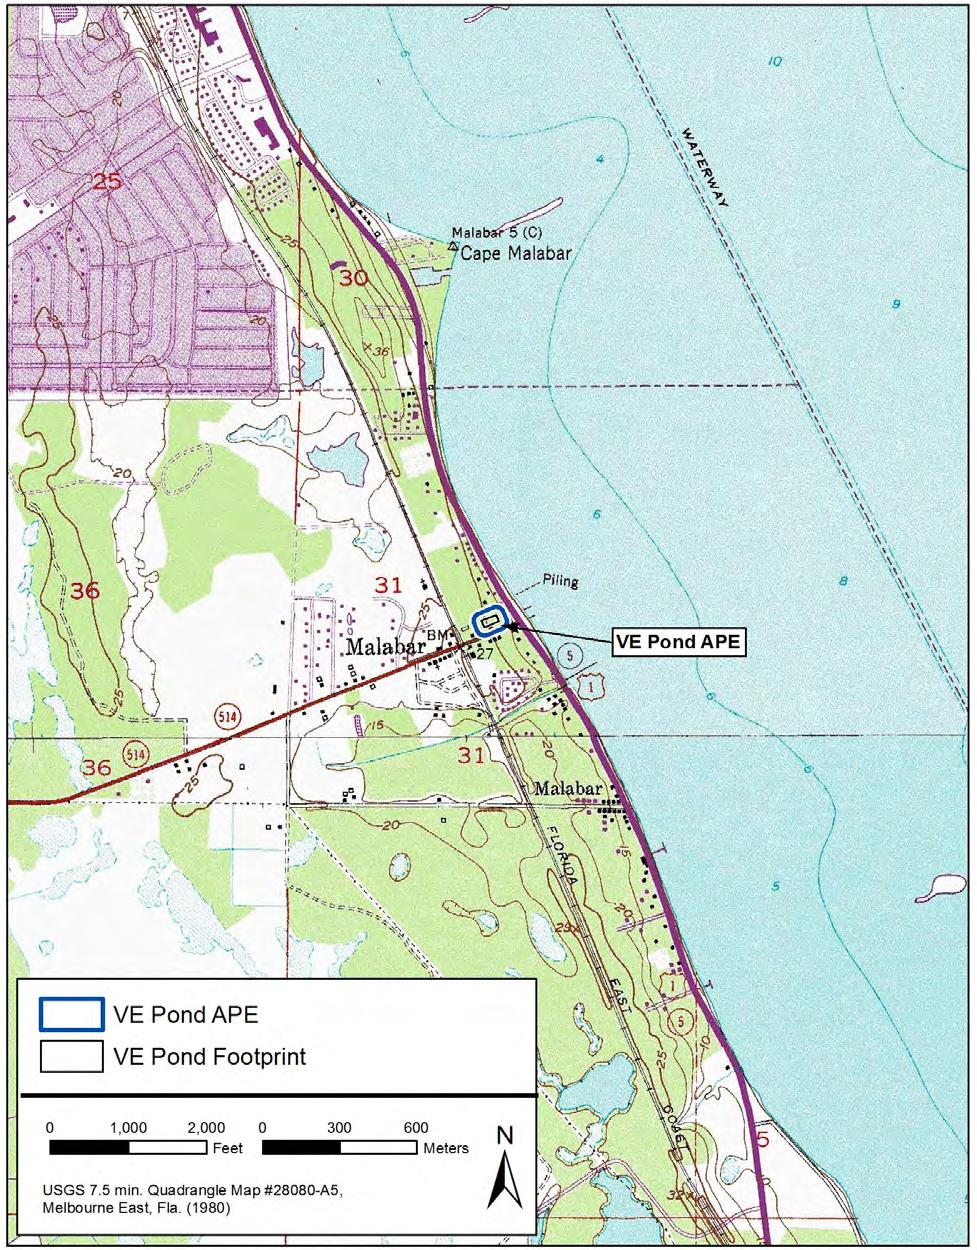 September 2015 SEARCH Final Report CRAS of Proposed VE Pond along SR 514, Brevard